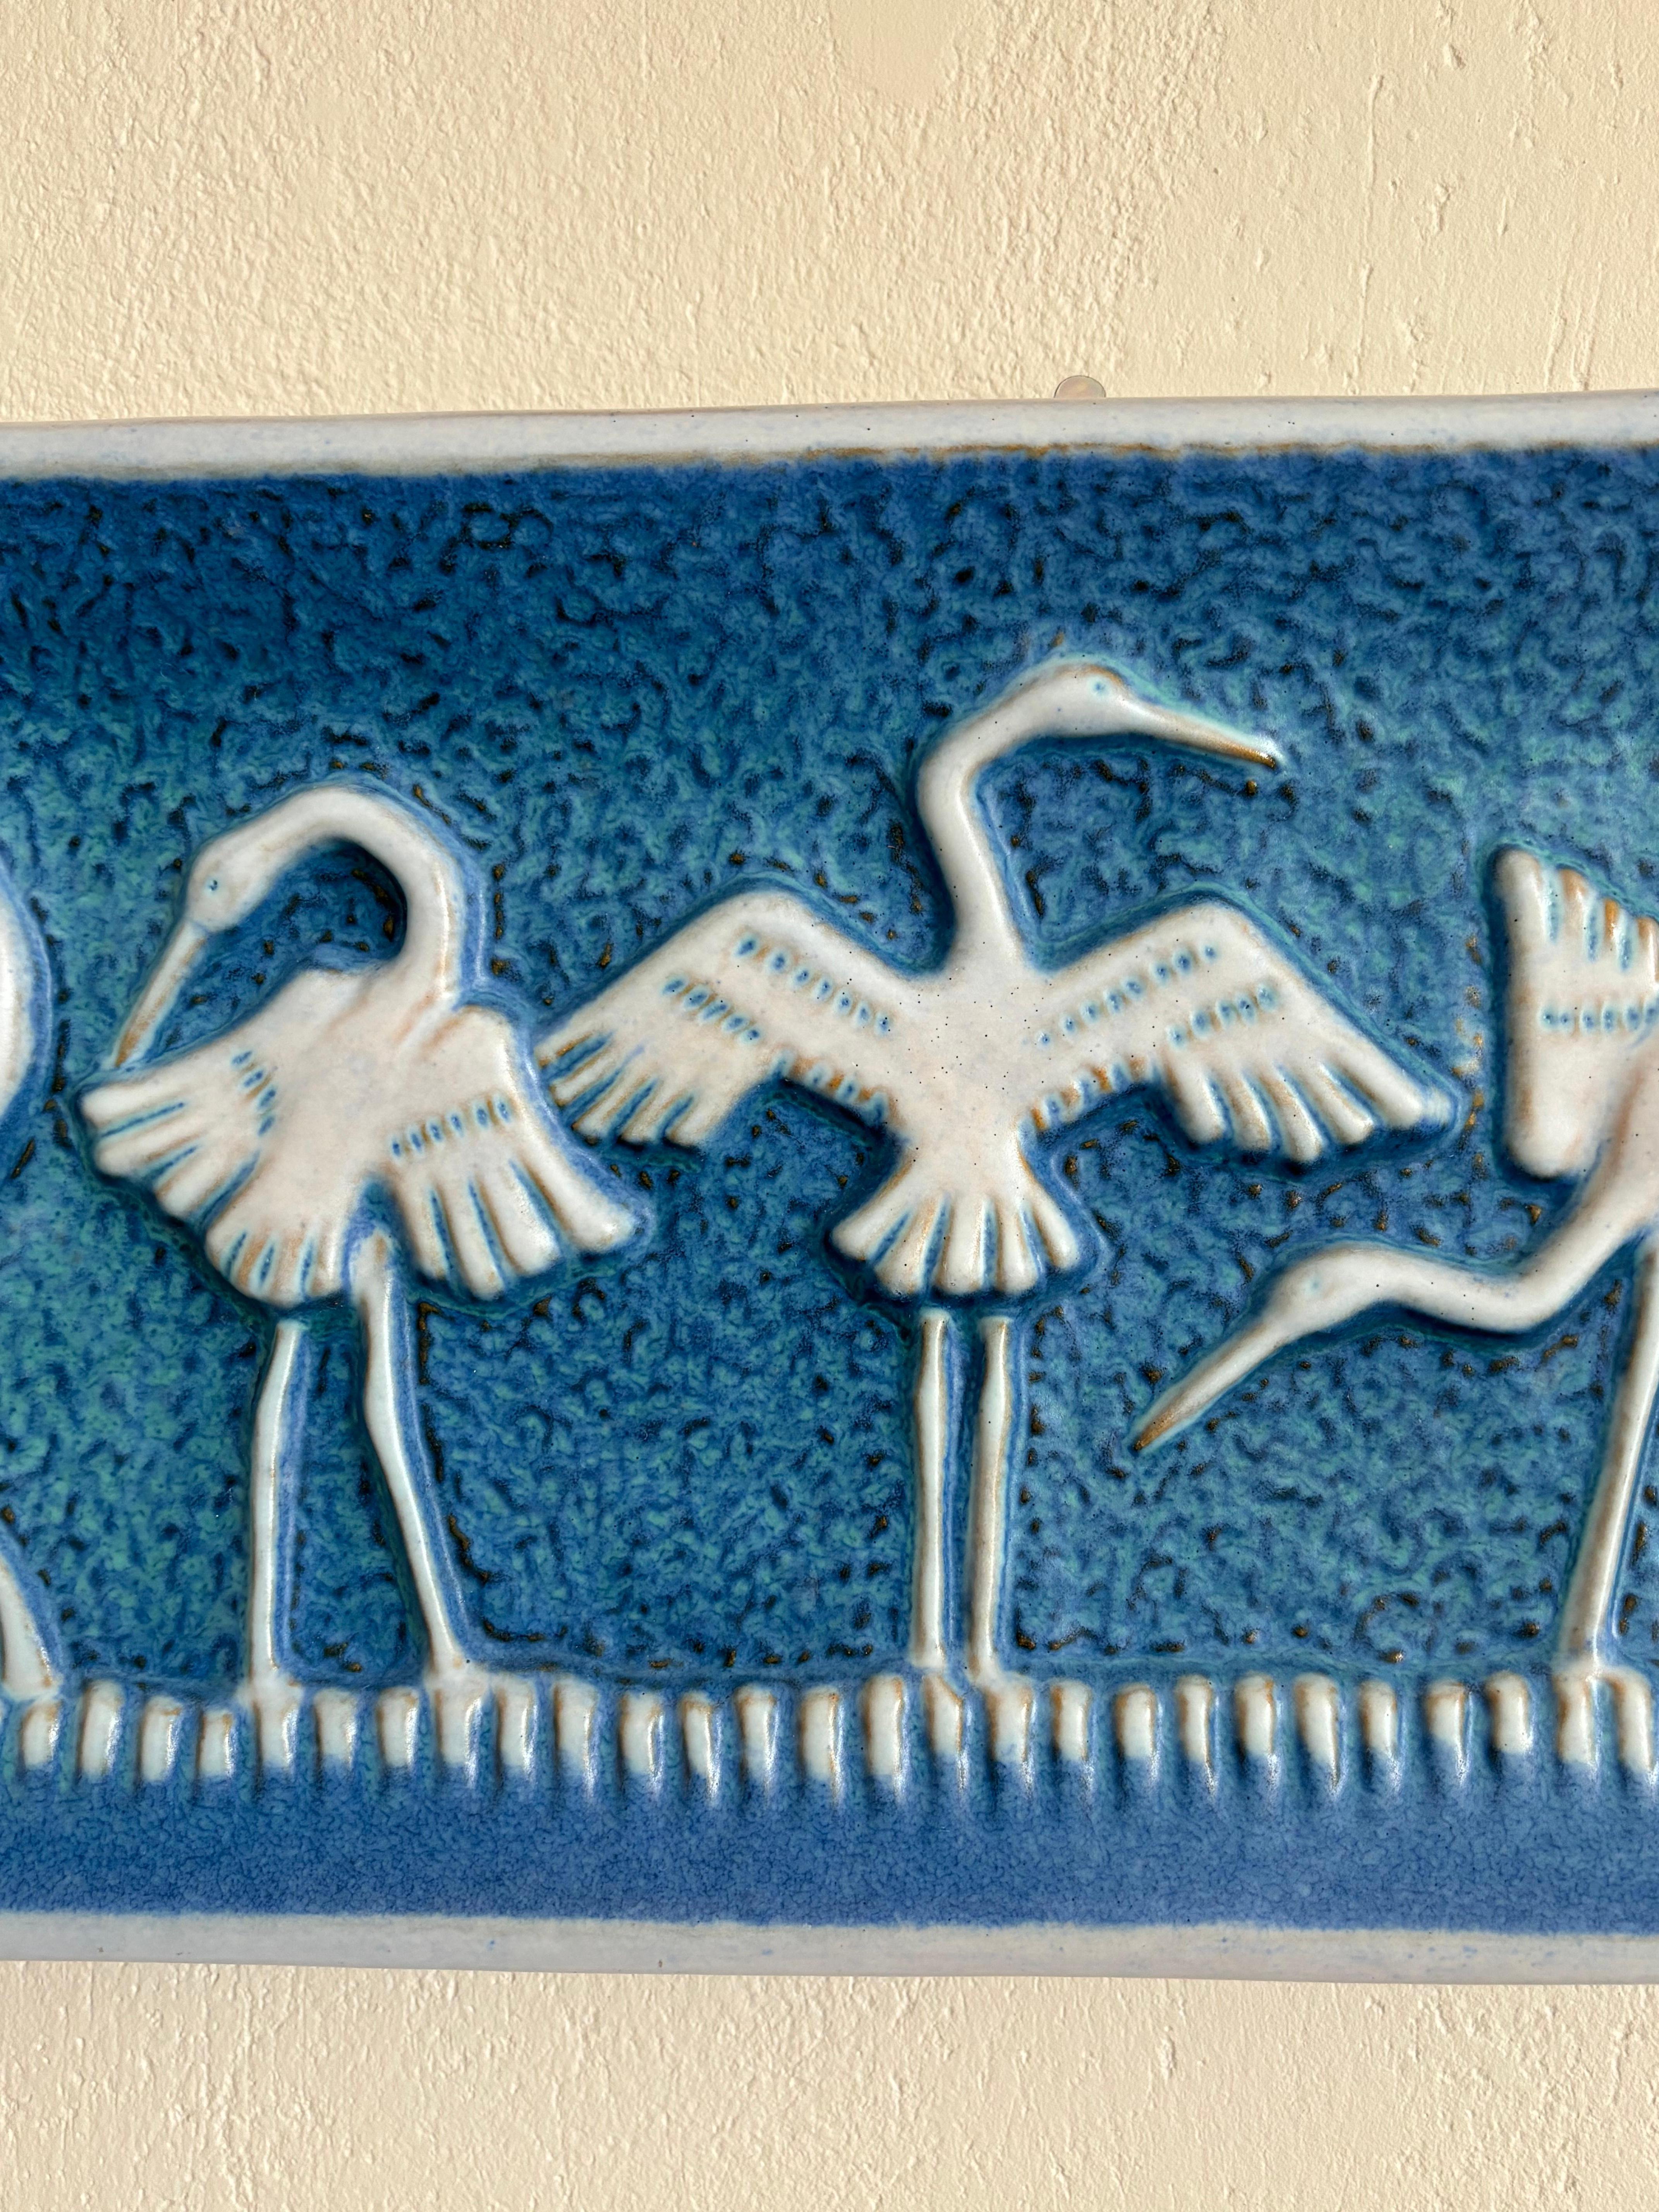 Glazed Norrman Motala Blue Crane Ceramic Wall Plaque, 1960s For Sale